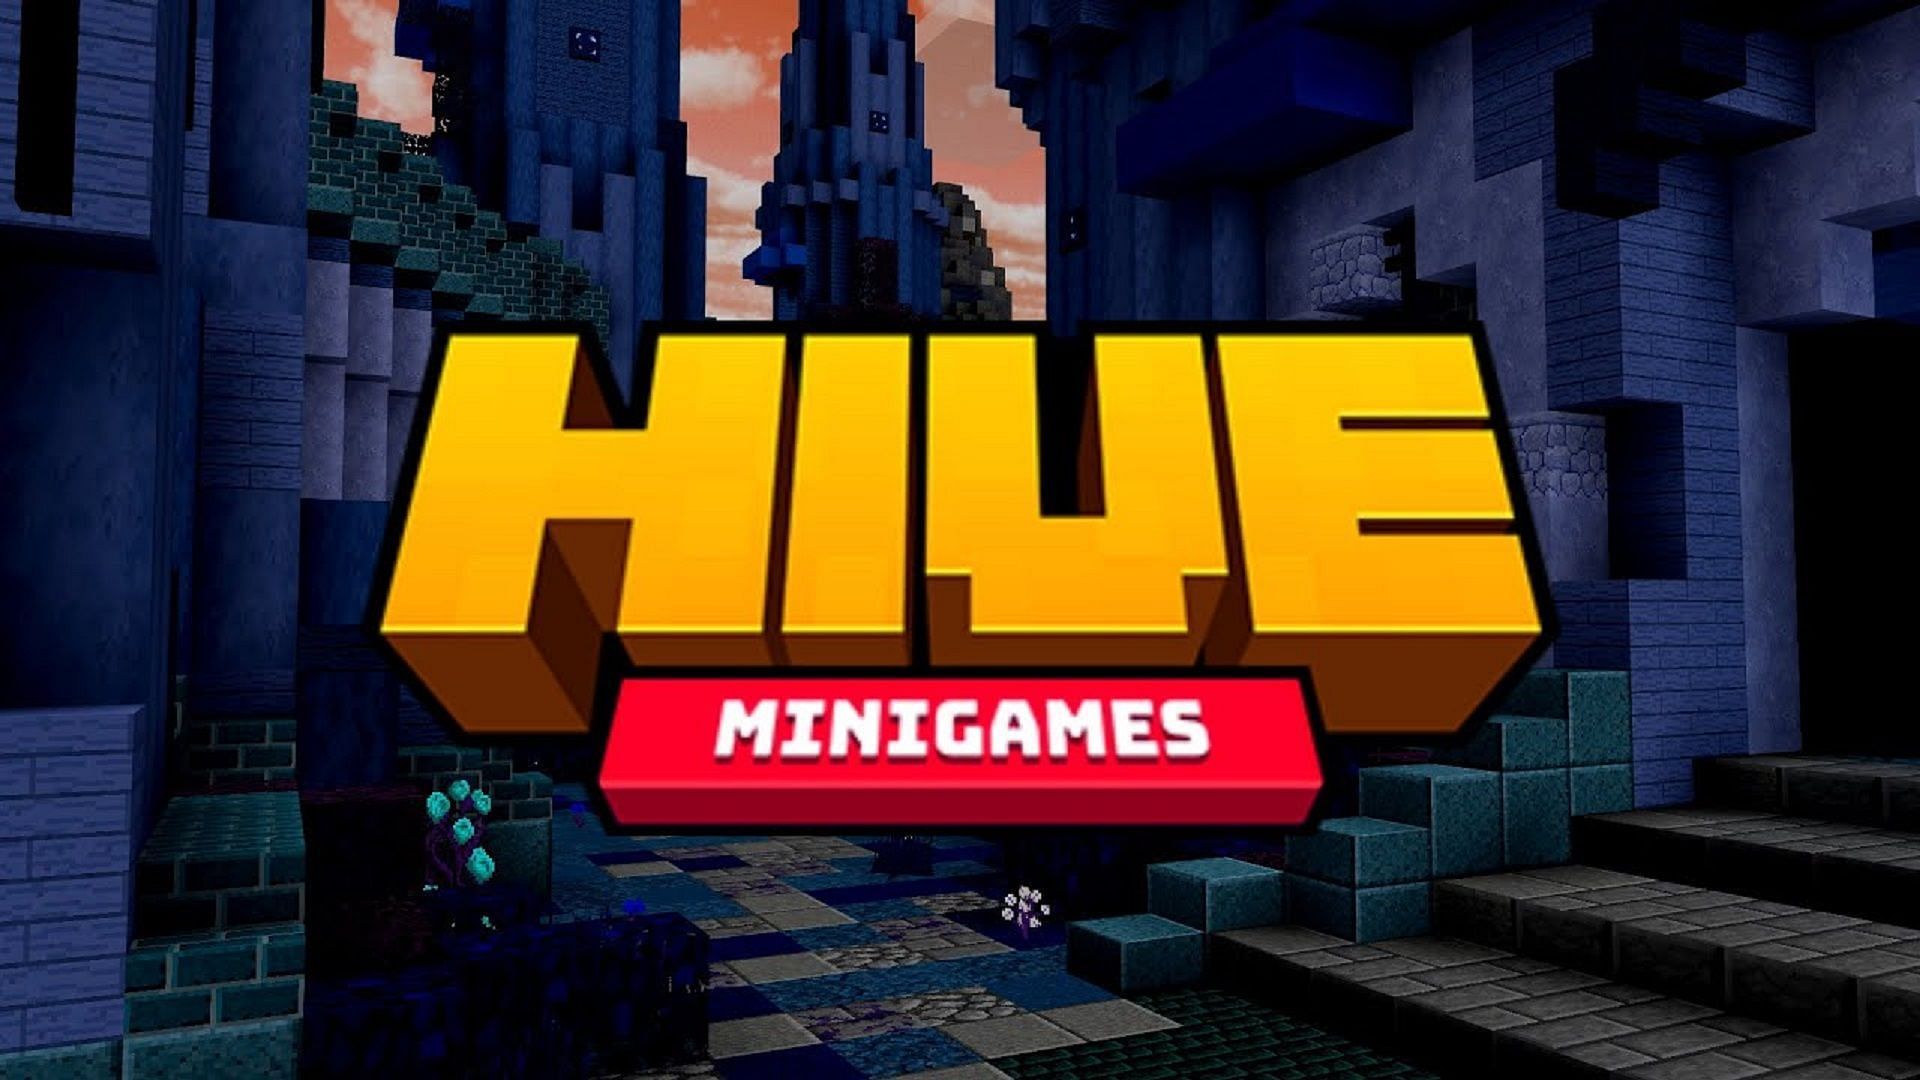 A trailer shot of the Hive&#039;s Minecraft minigames world (Image via PotatoPie25/YouTube)